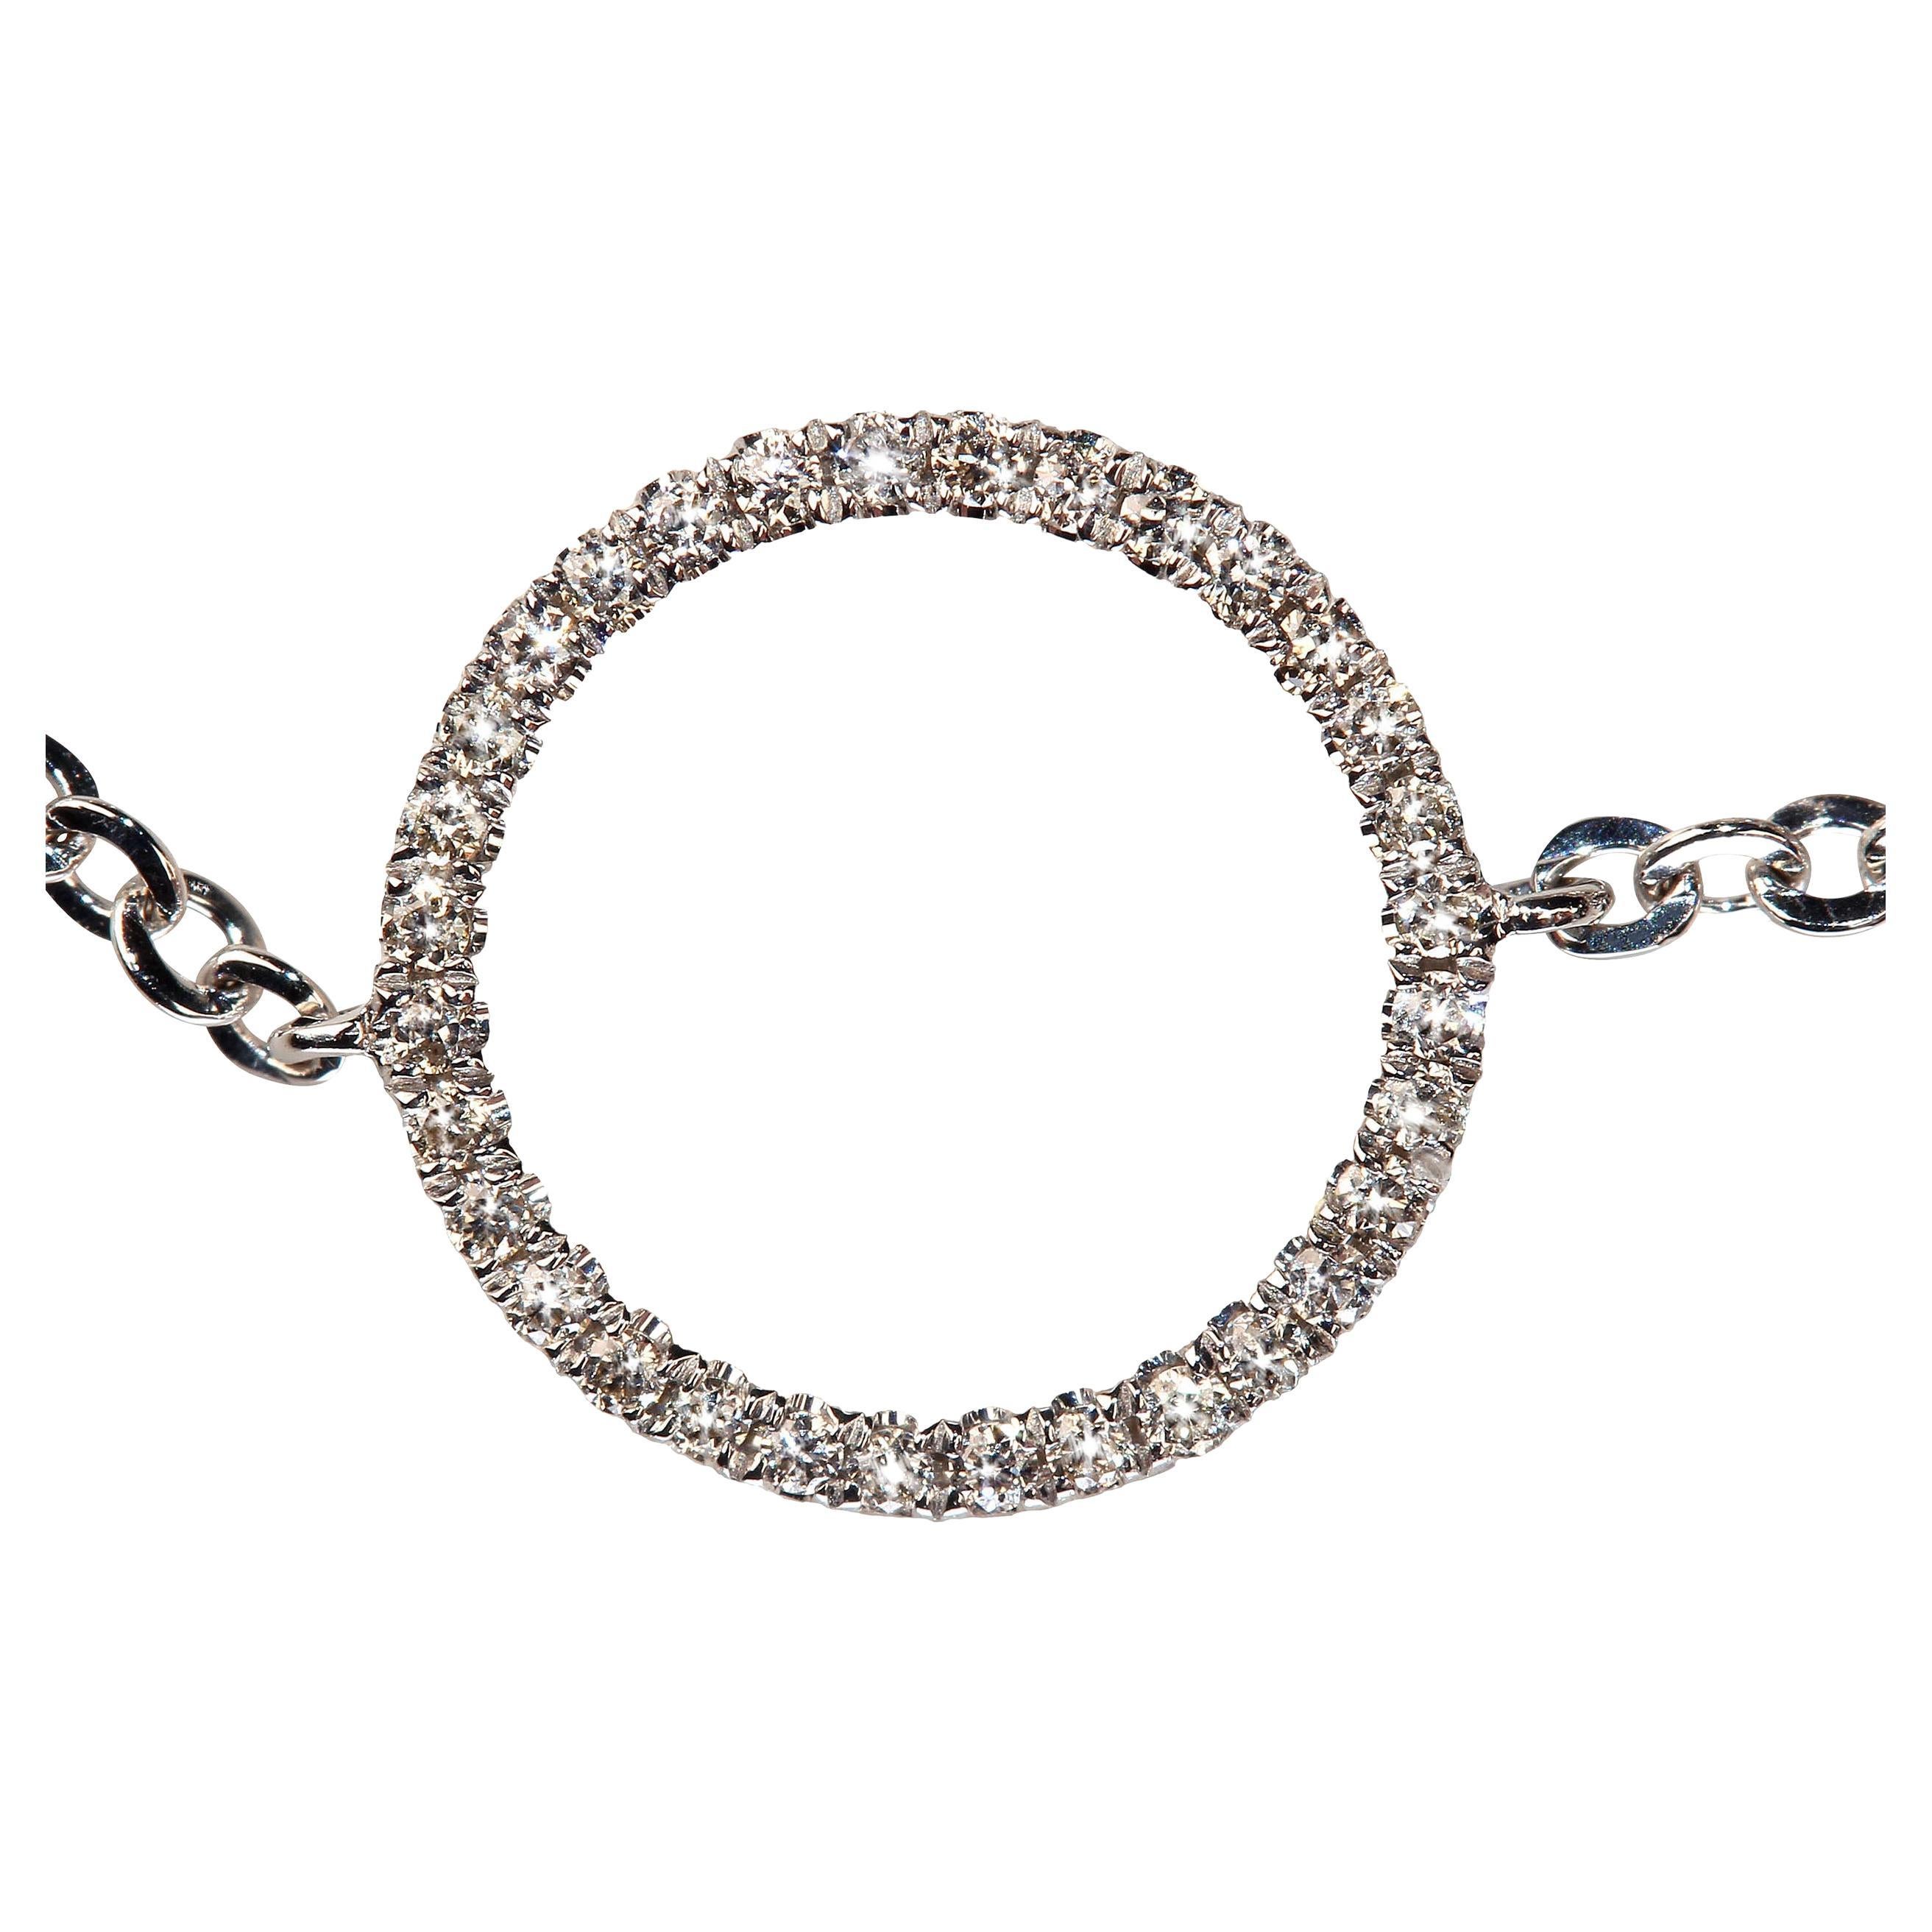 AJD Delicate 14K White Gold Bracelet or Ankle Bracelet with Diamond Circle